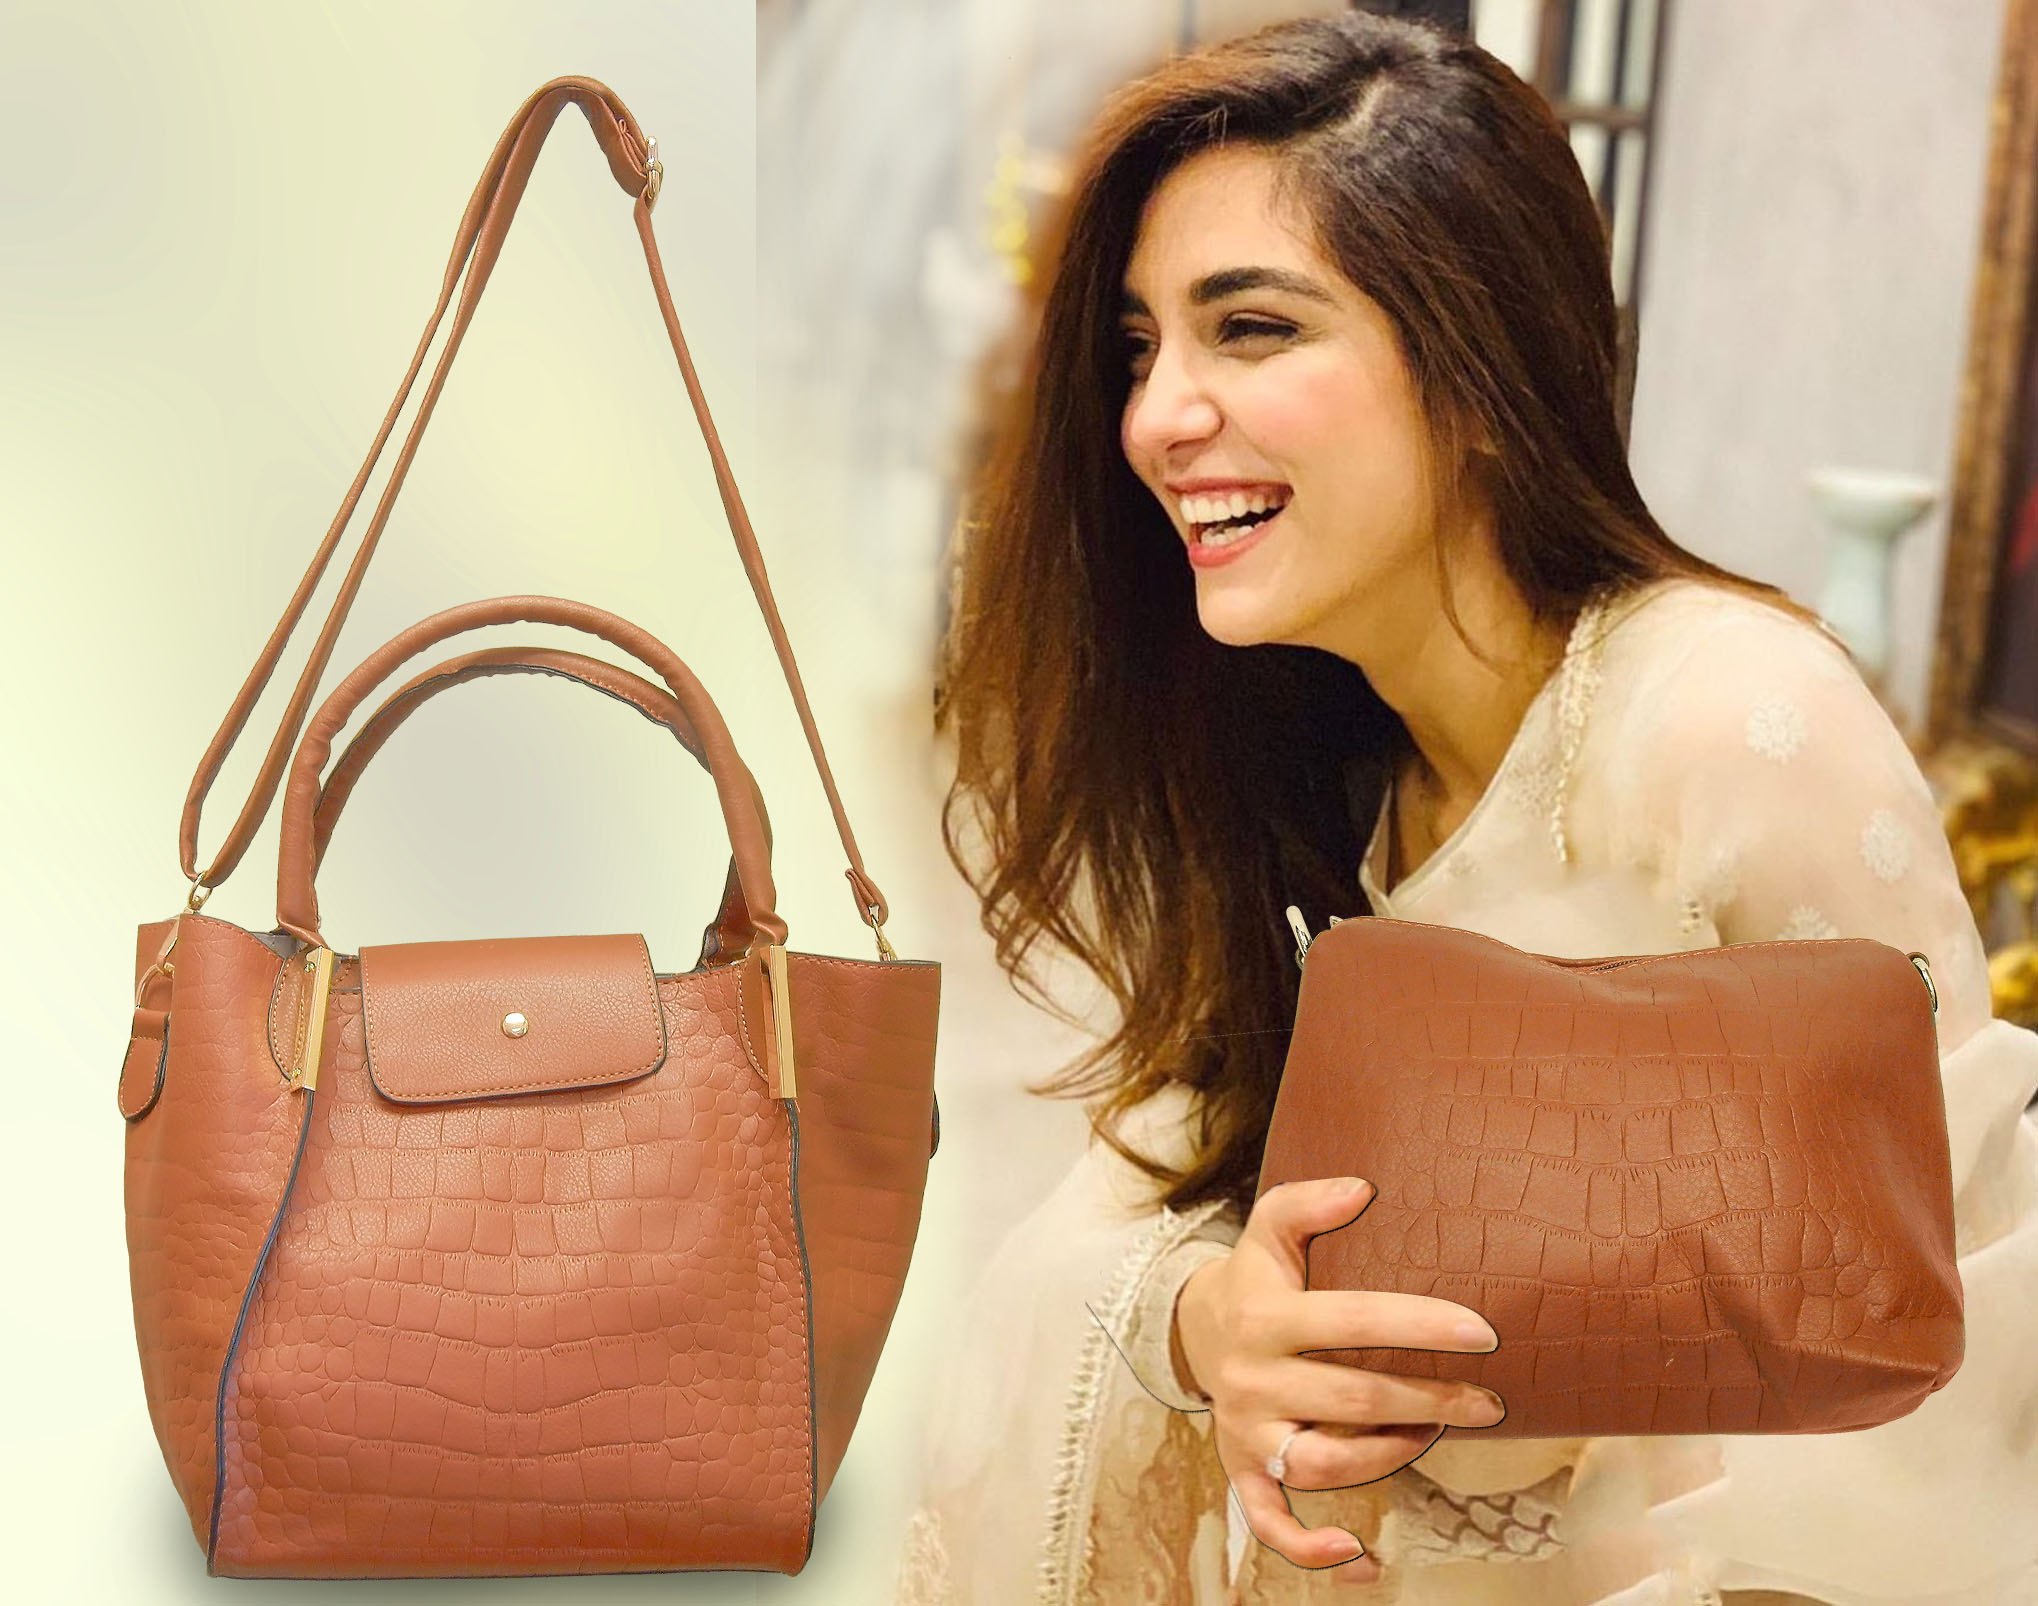 Midsize Ladies Handbag with removable straps, coffee tan color,